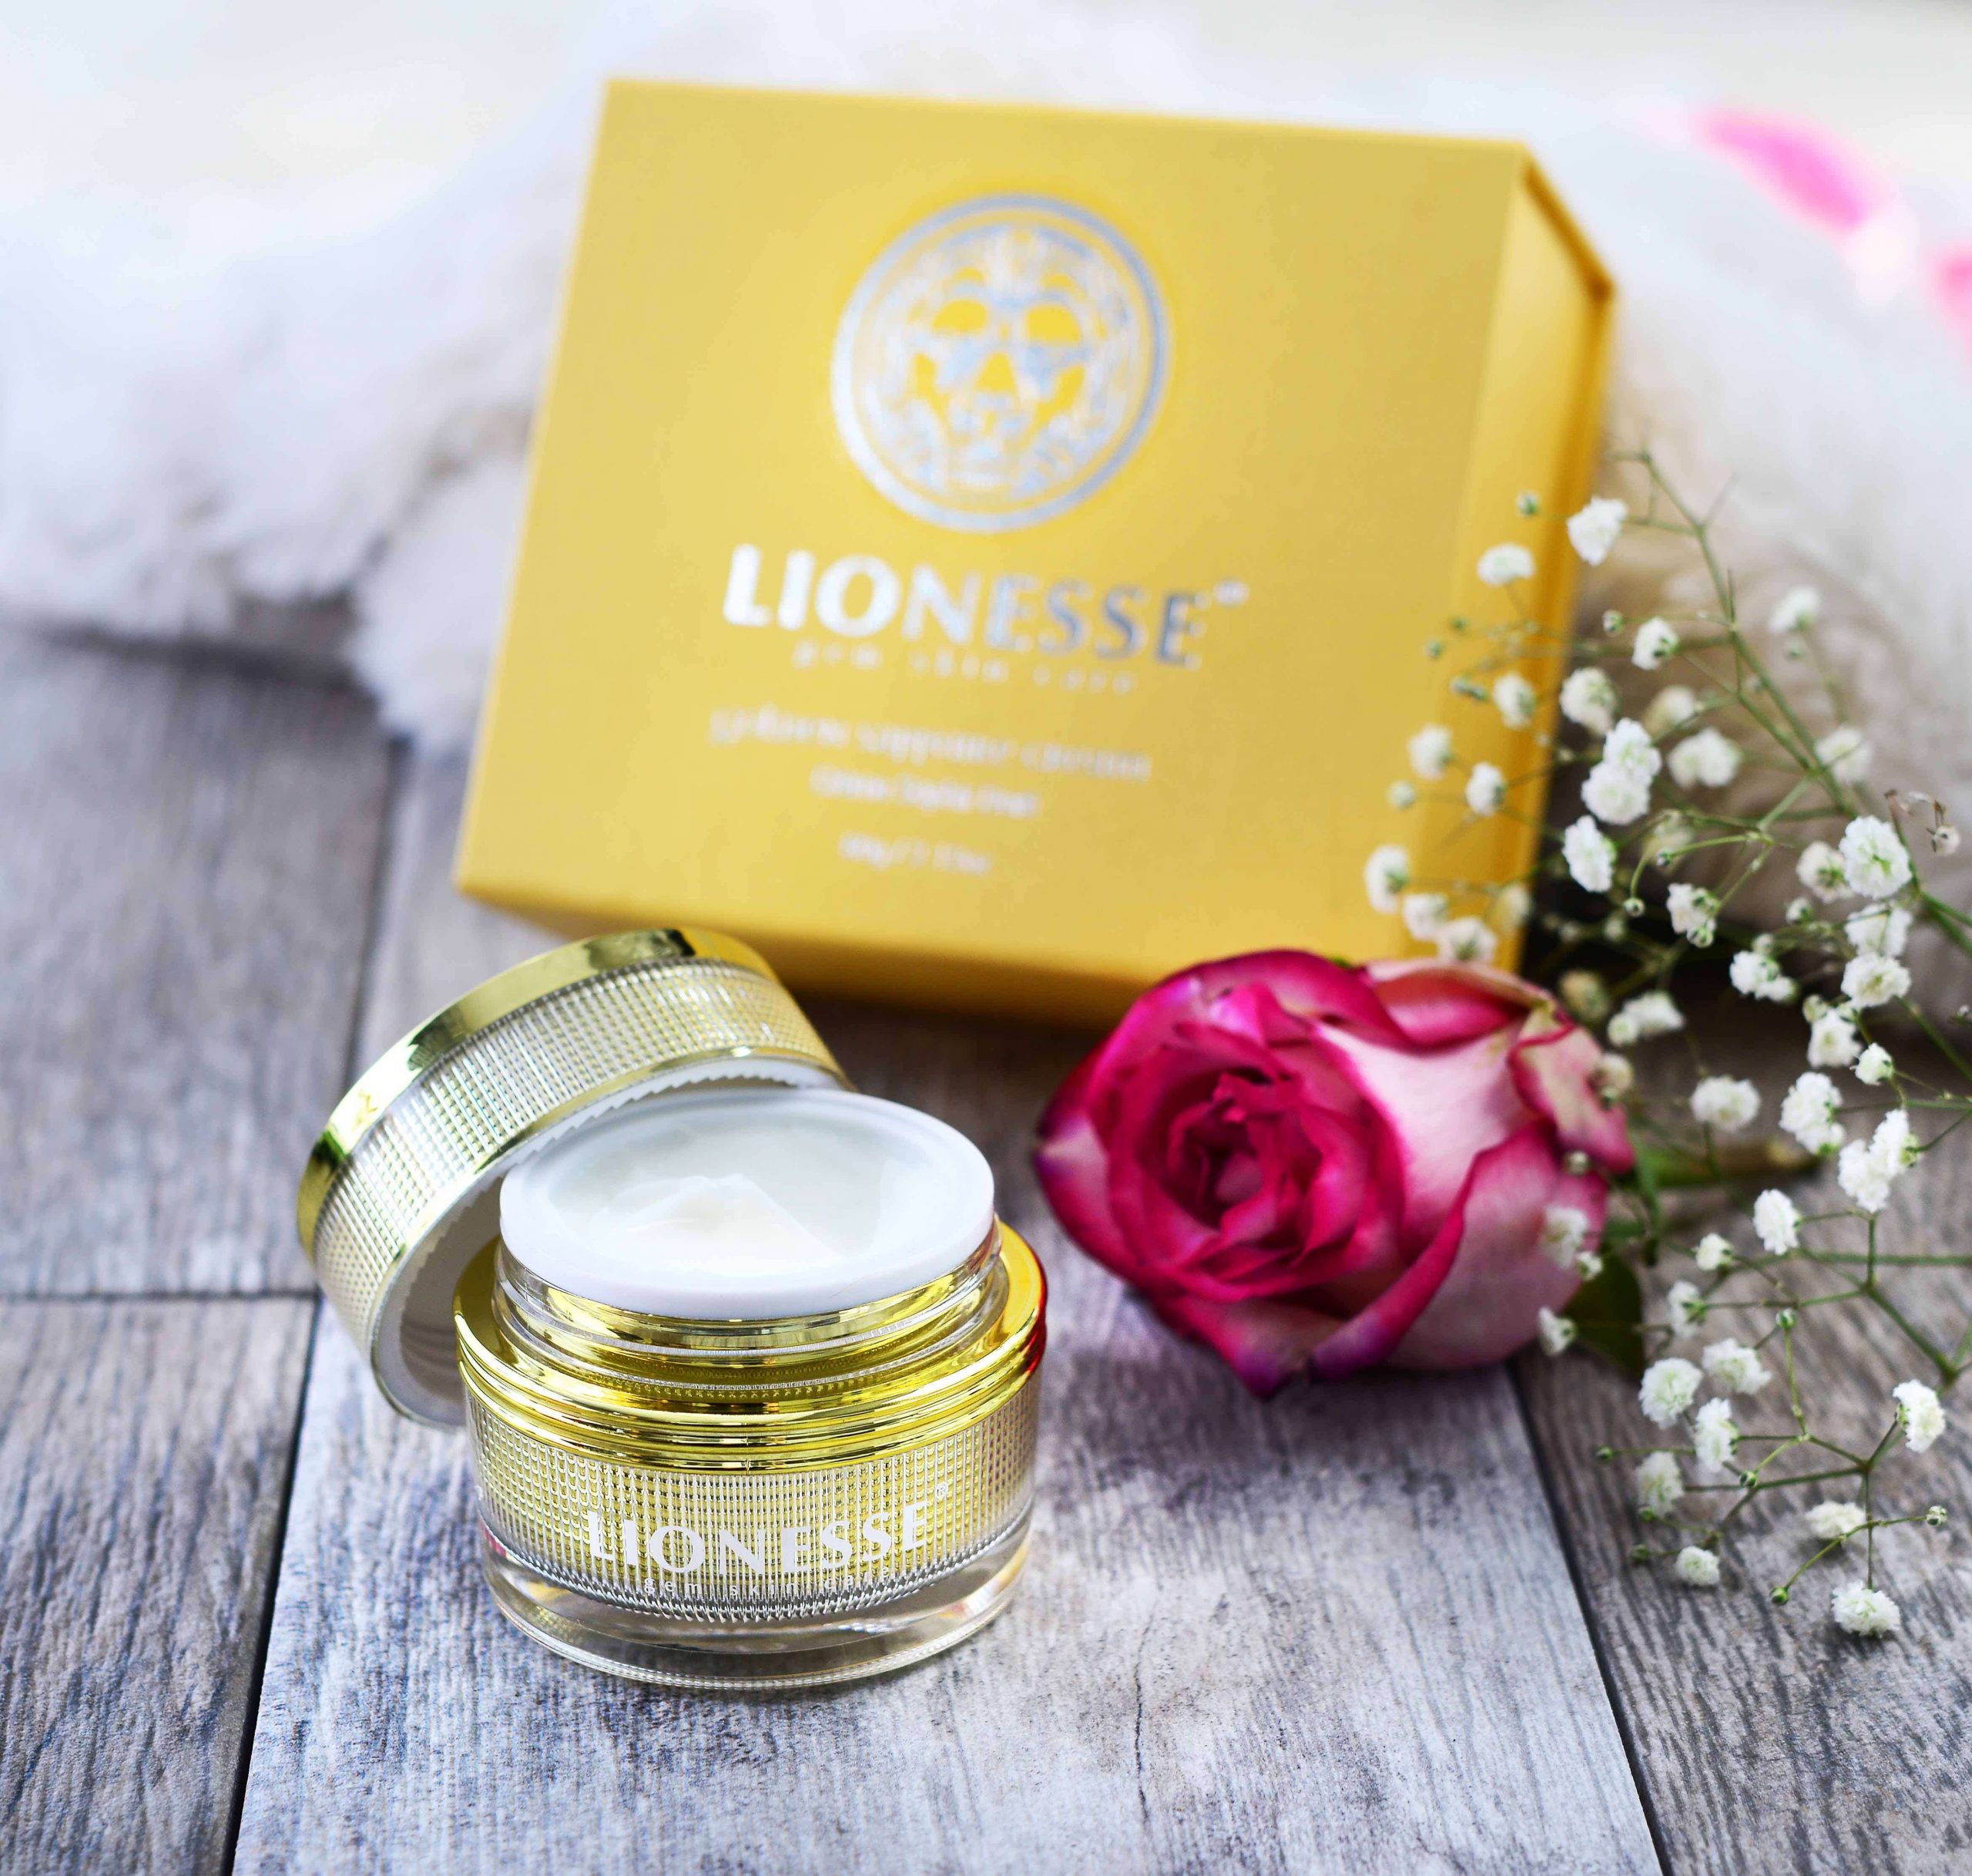 Lionesse Golden Sapphire Cream